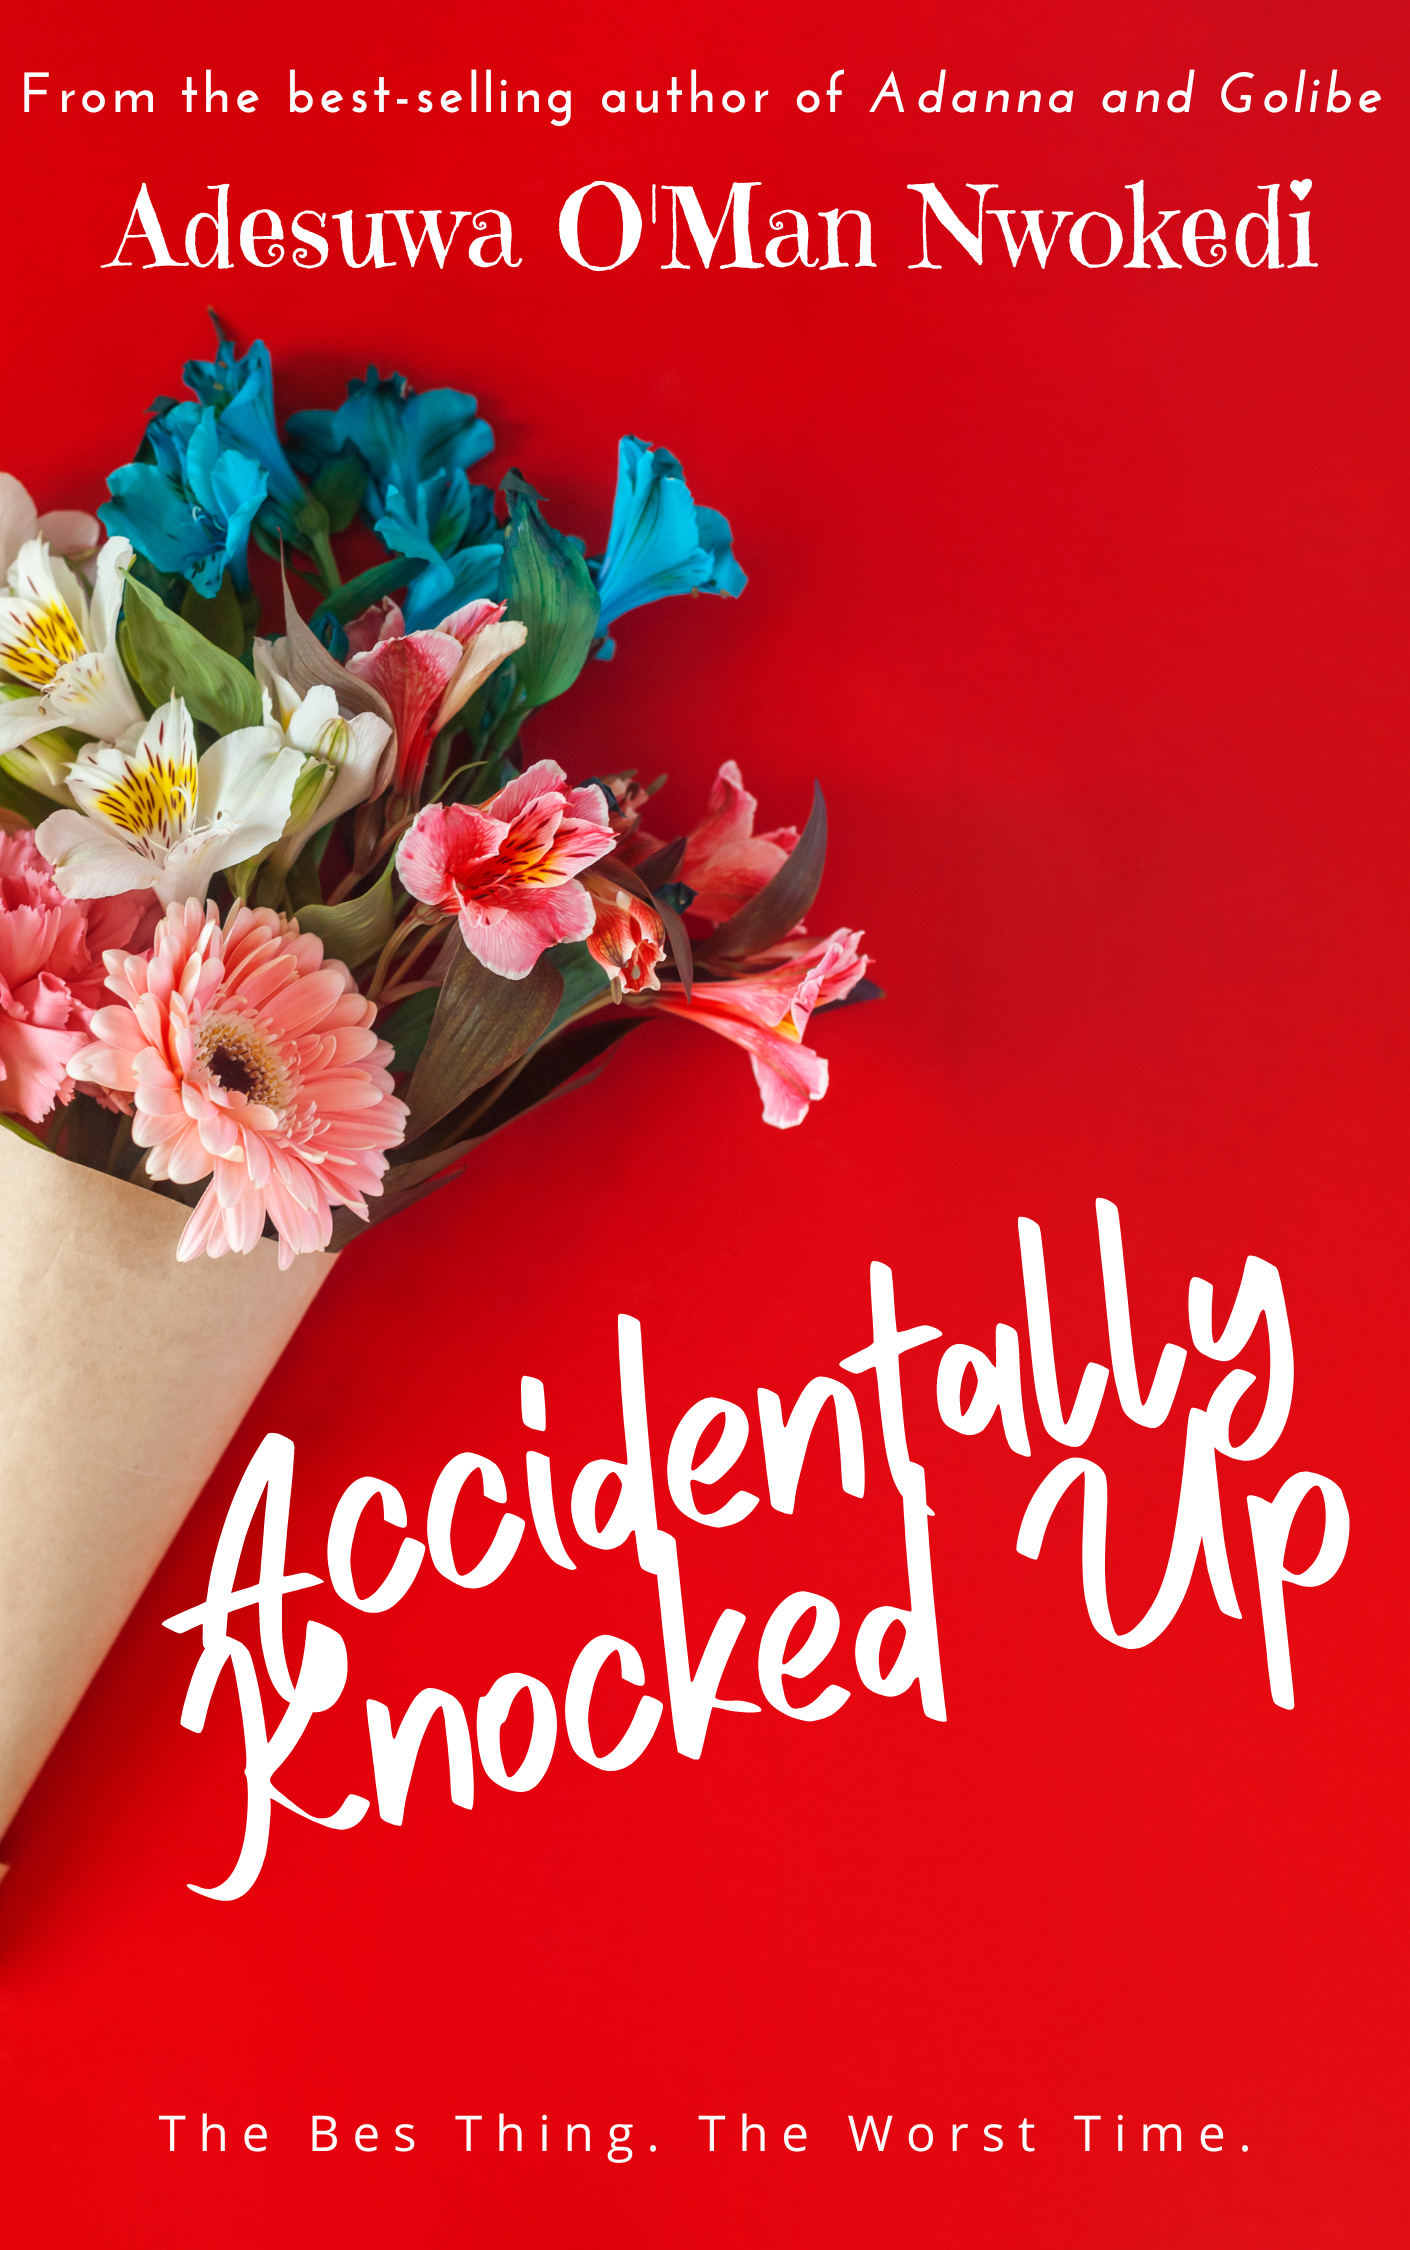 Accidentally-Knocked-Up